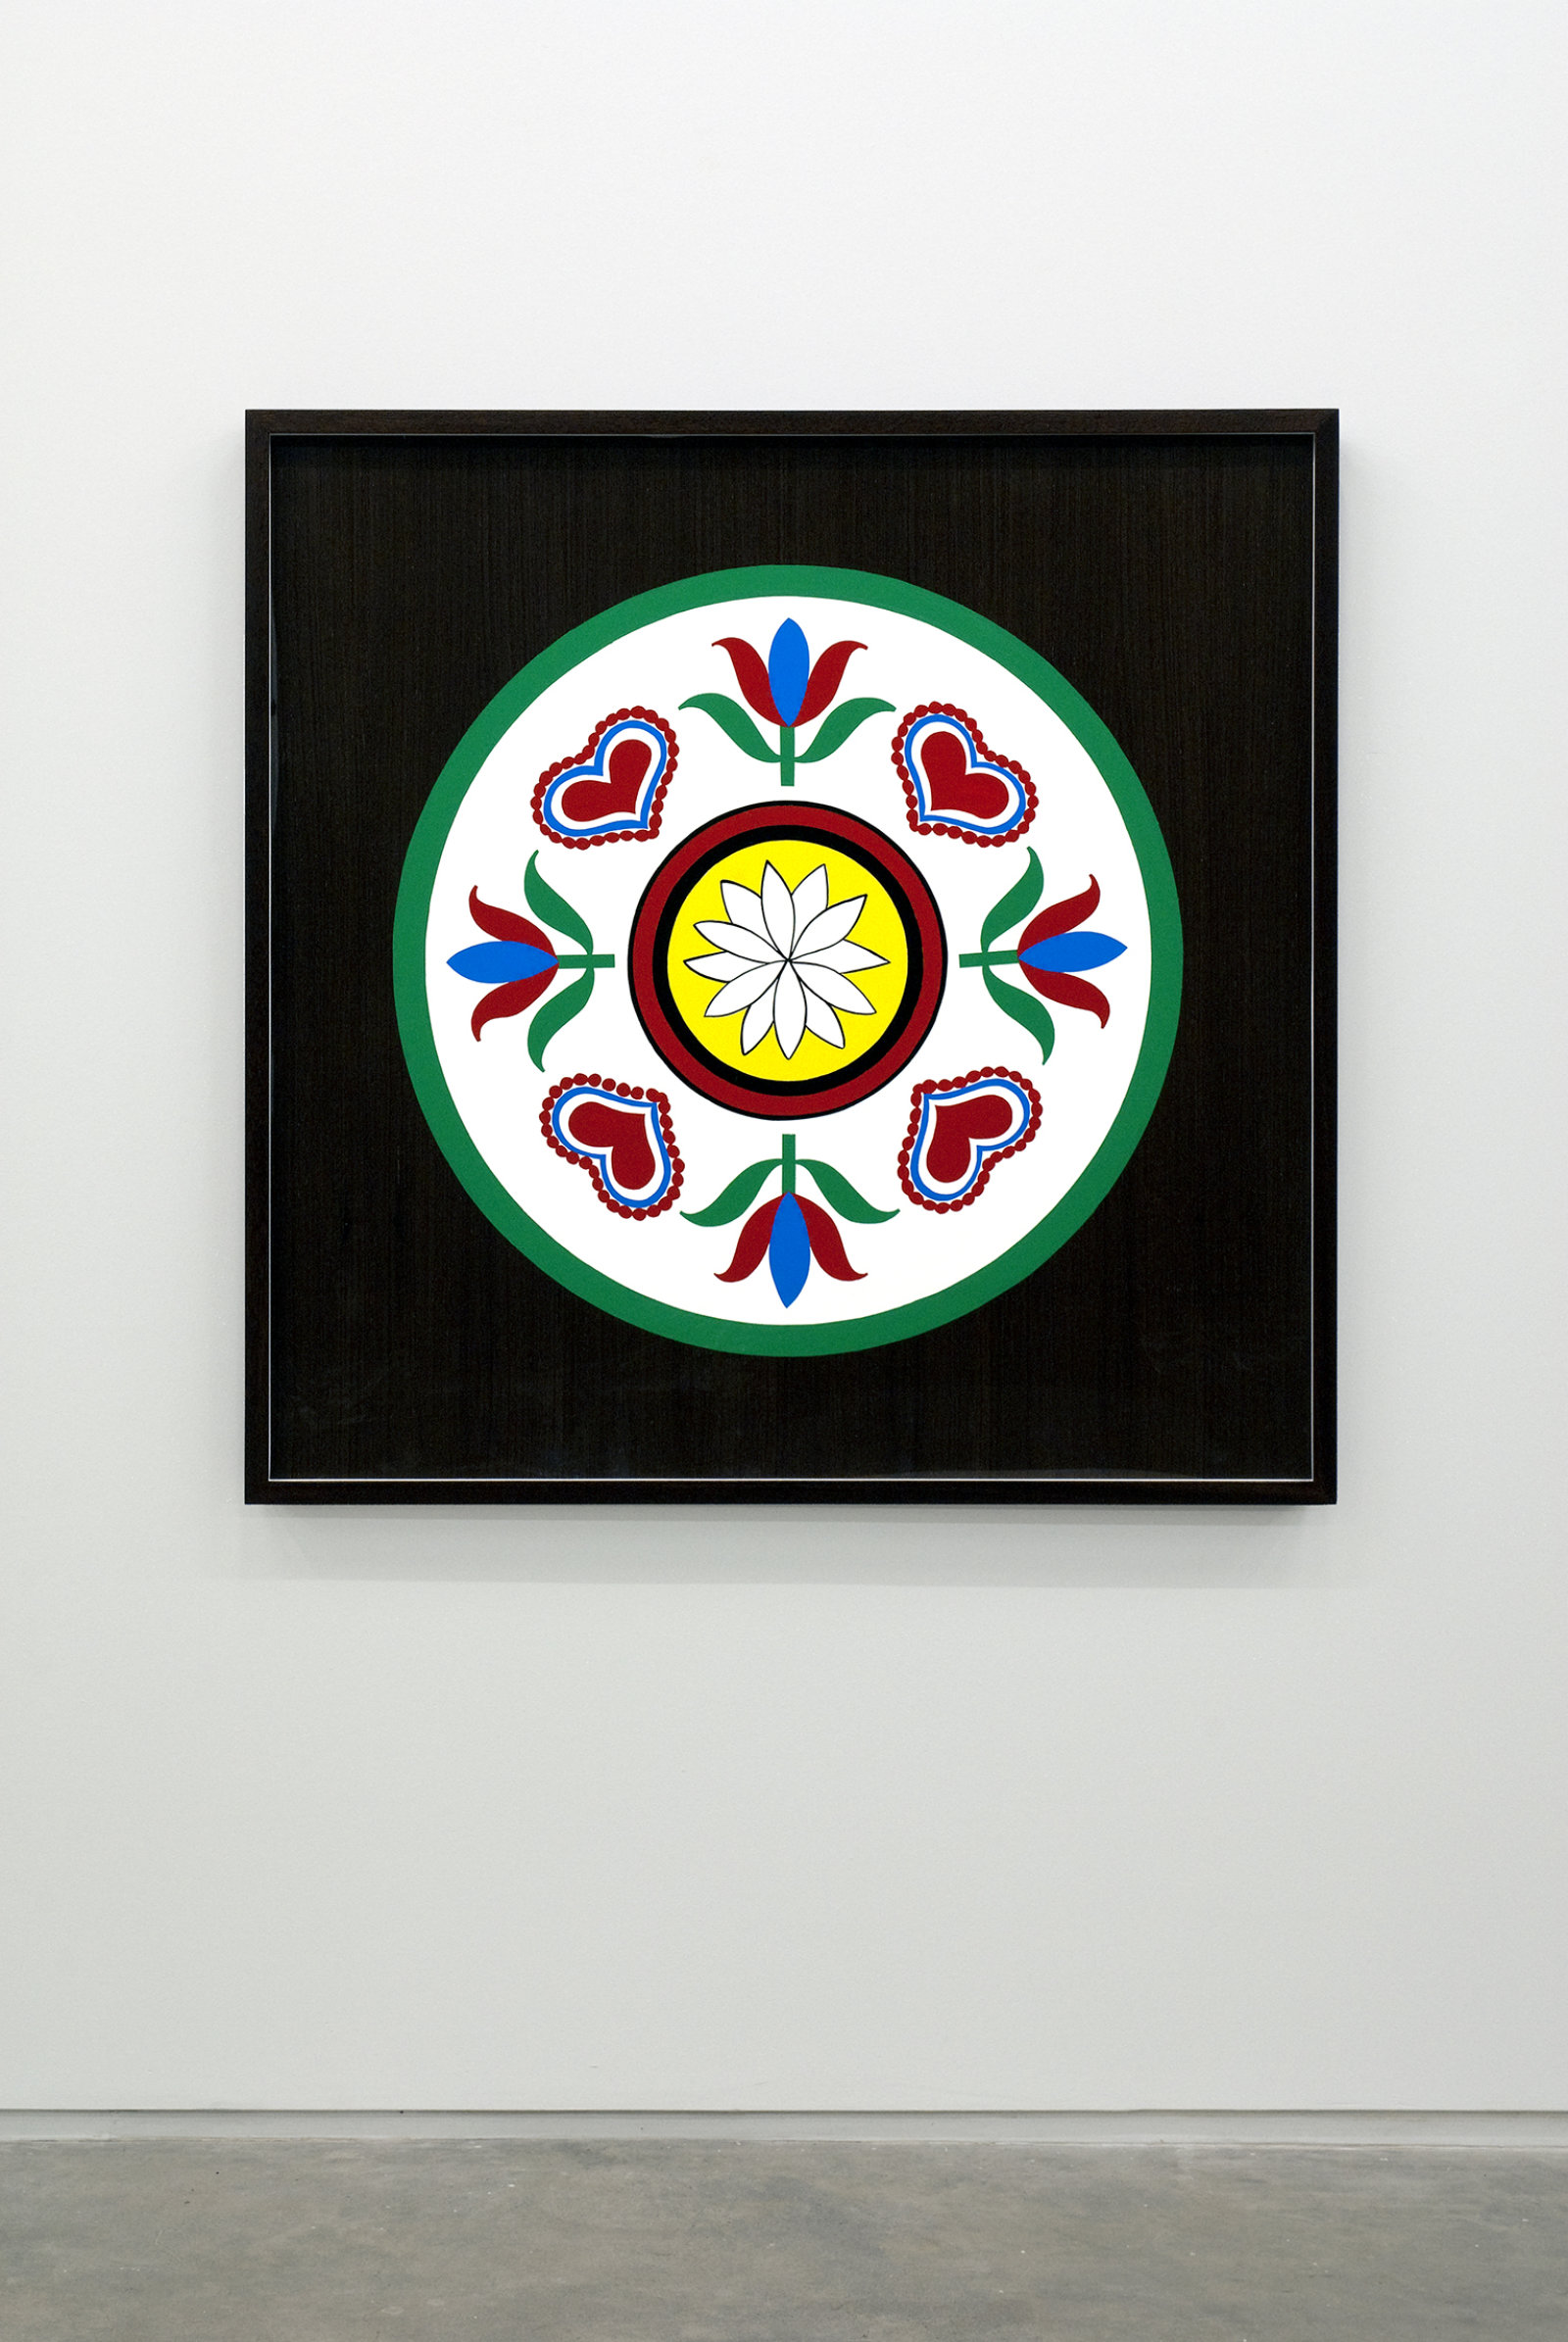 ​Myfanwy MacLeod, Hex II, 2009, enamel on wood, 48 x 48 in. (122 x 122 cm) by 